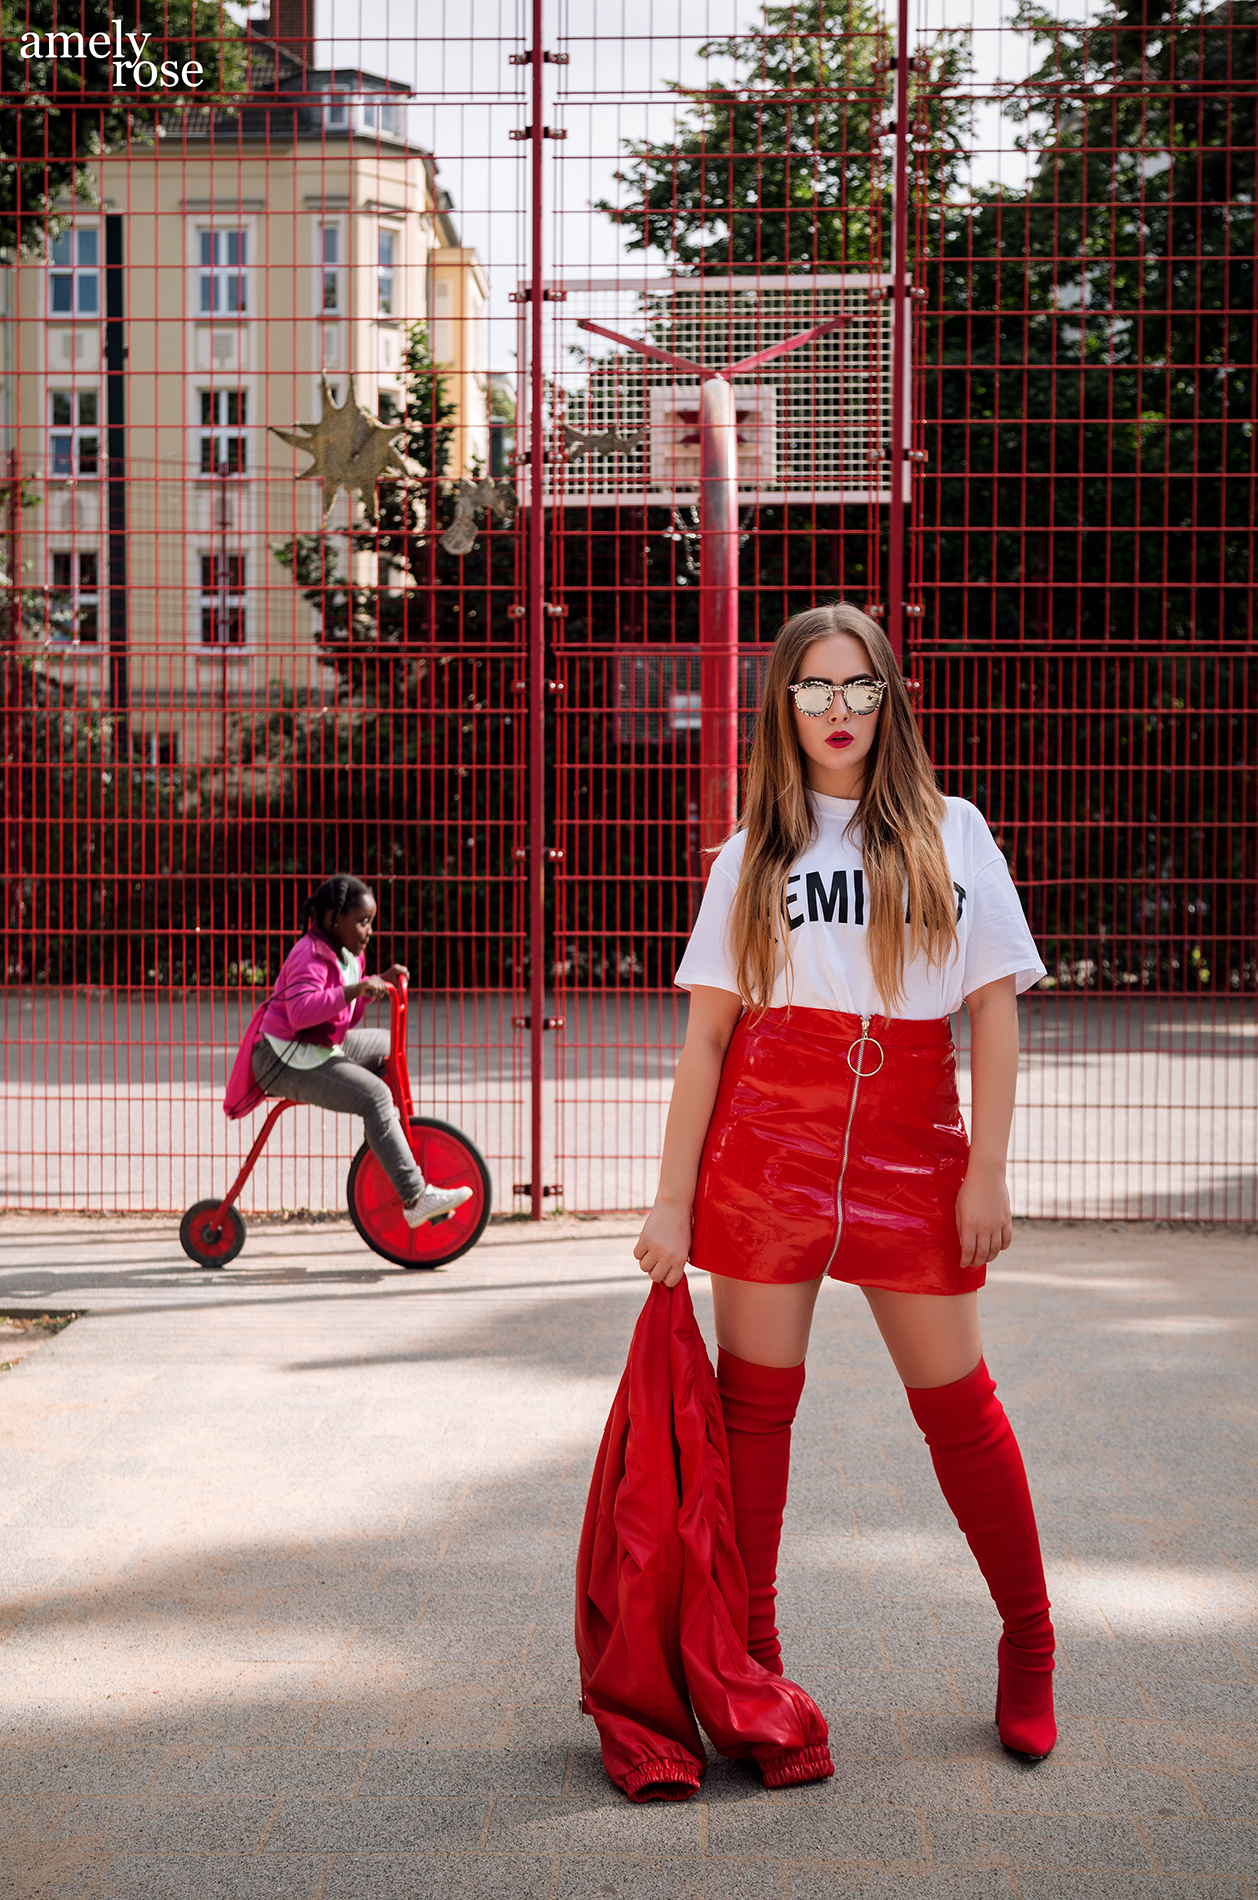 amelyrose, amely rose, amely-rose, fashionblogger, feministin, feminism, metoo, #metoo, düsseldorf, sportplatz, lackrock, rot, lady in red, statement shirt